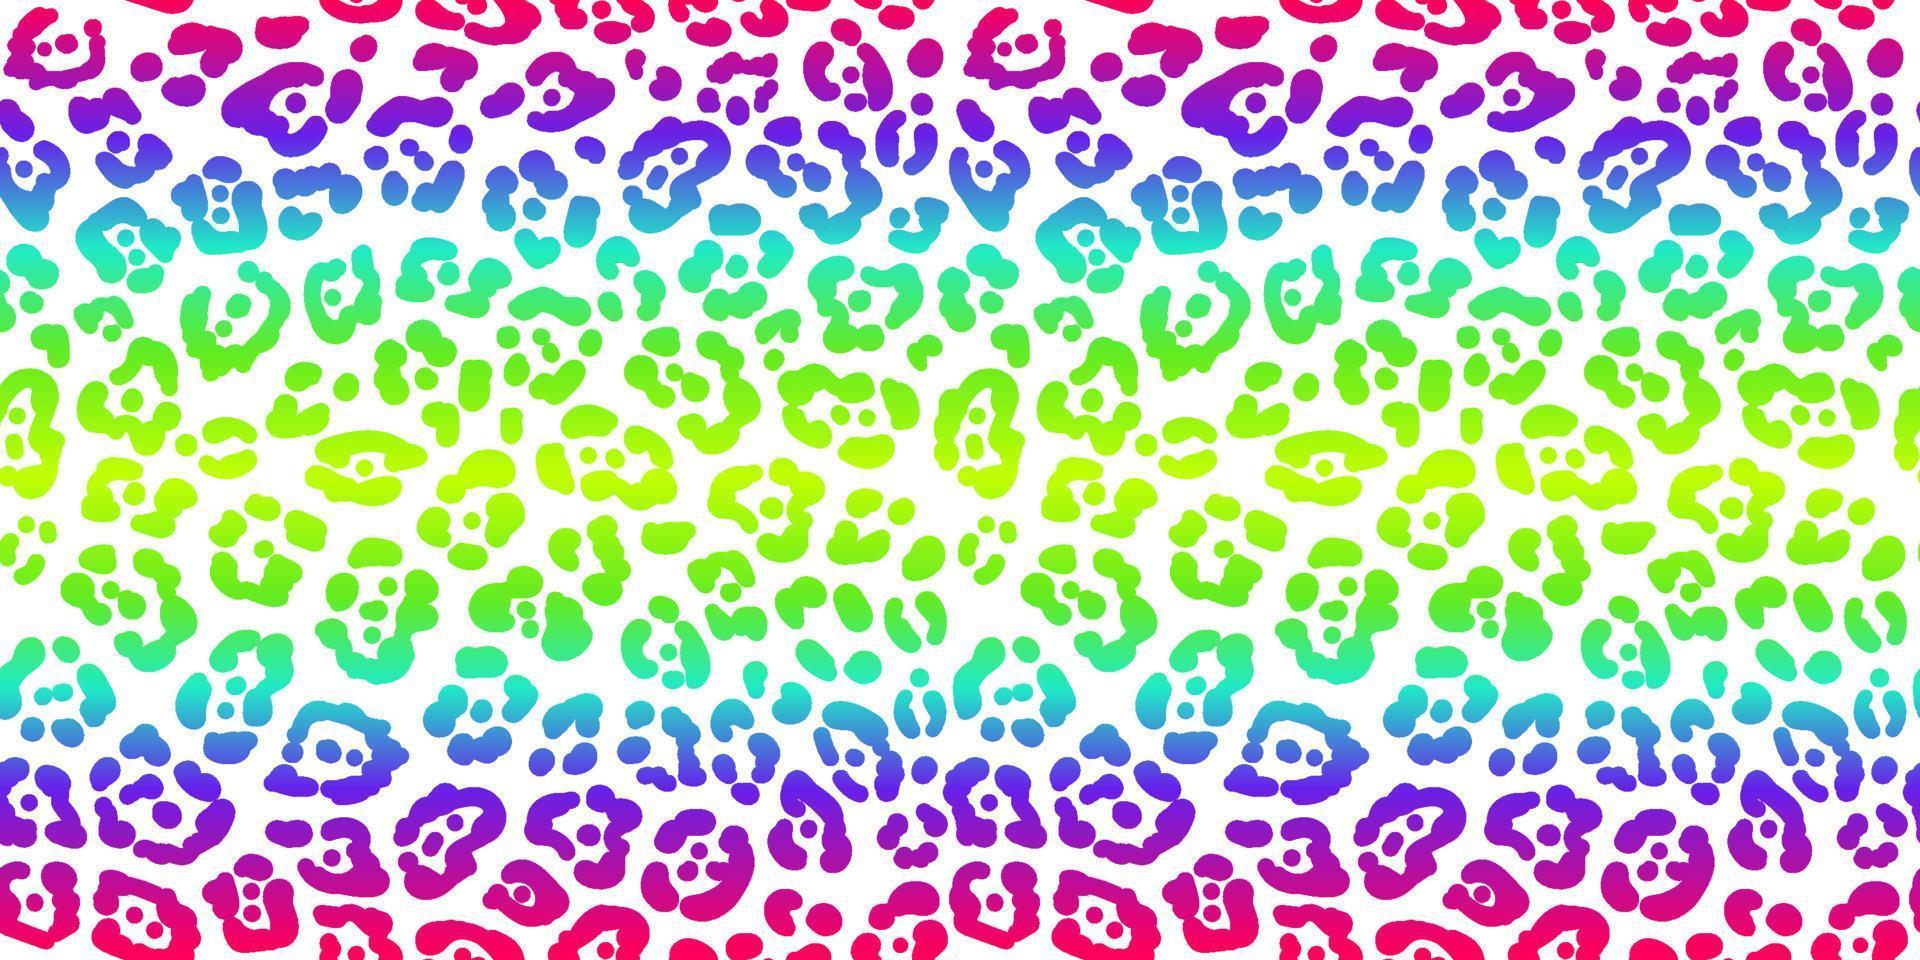 neon leopard seamless mönster. regnbågsfärgad prickig bakgrund. vektor djur print